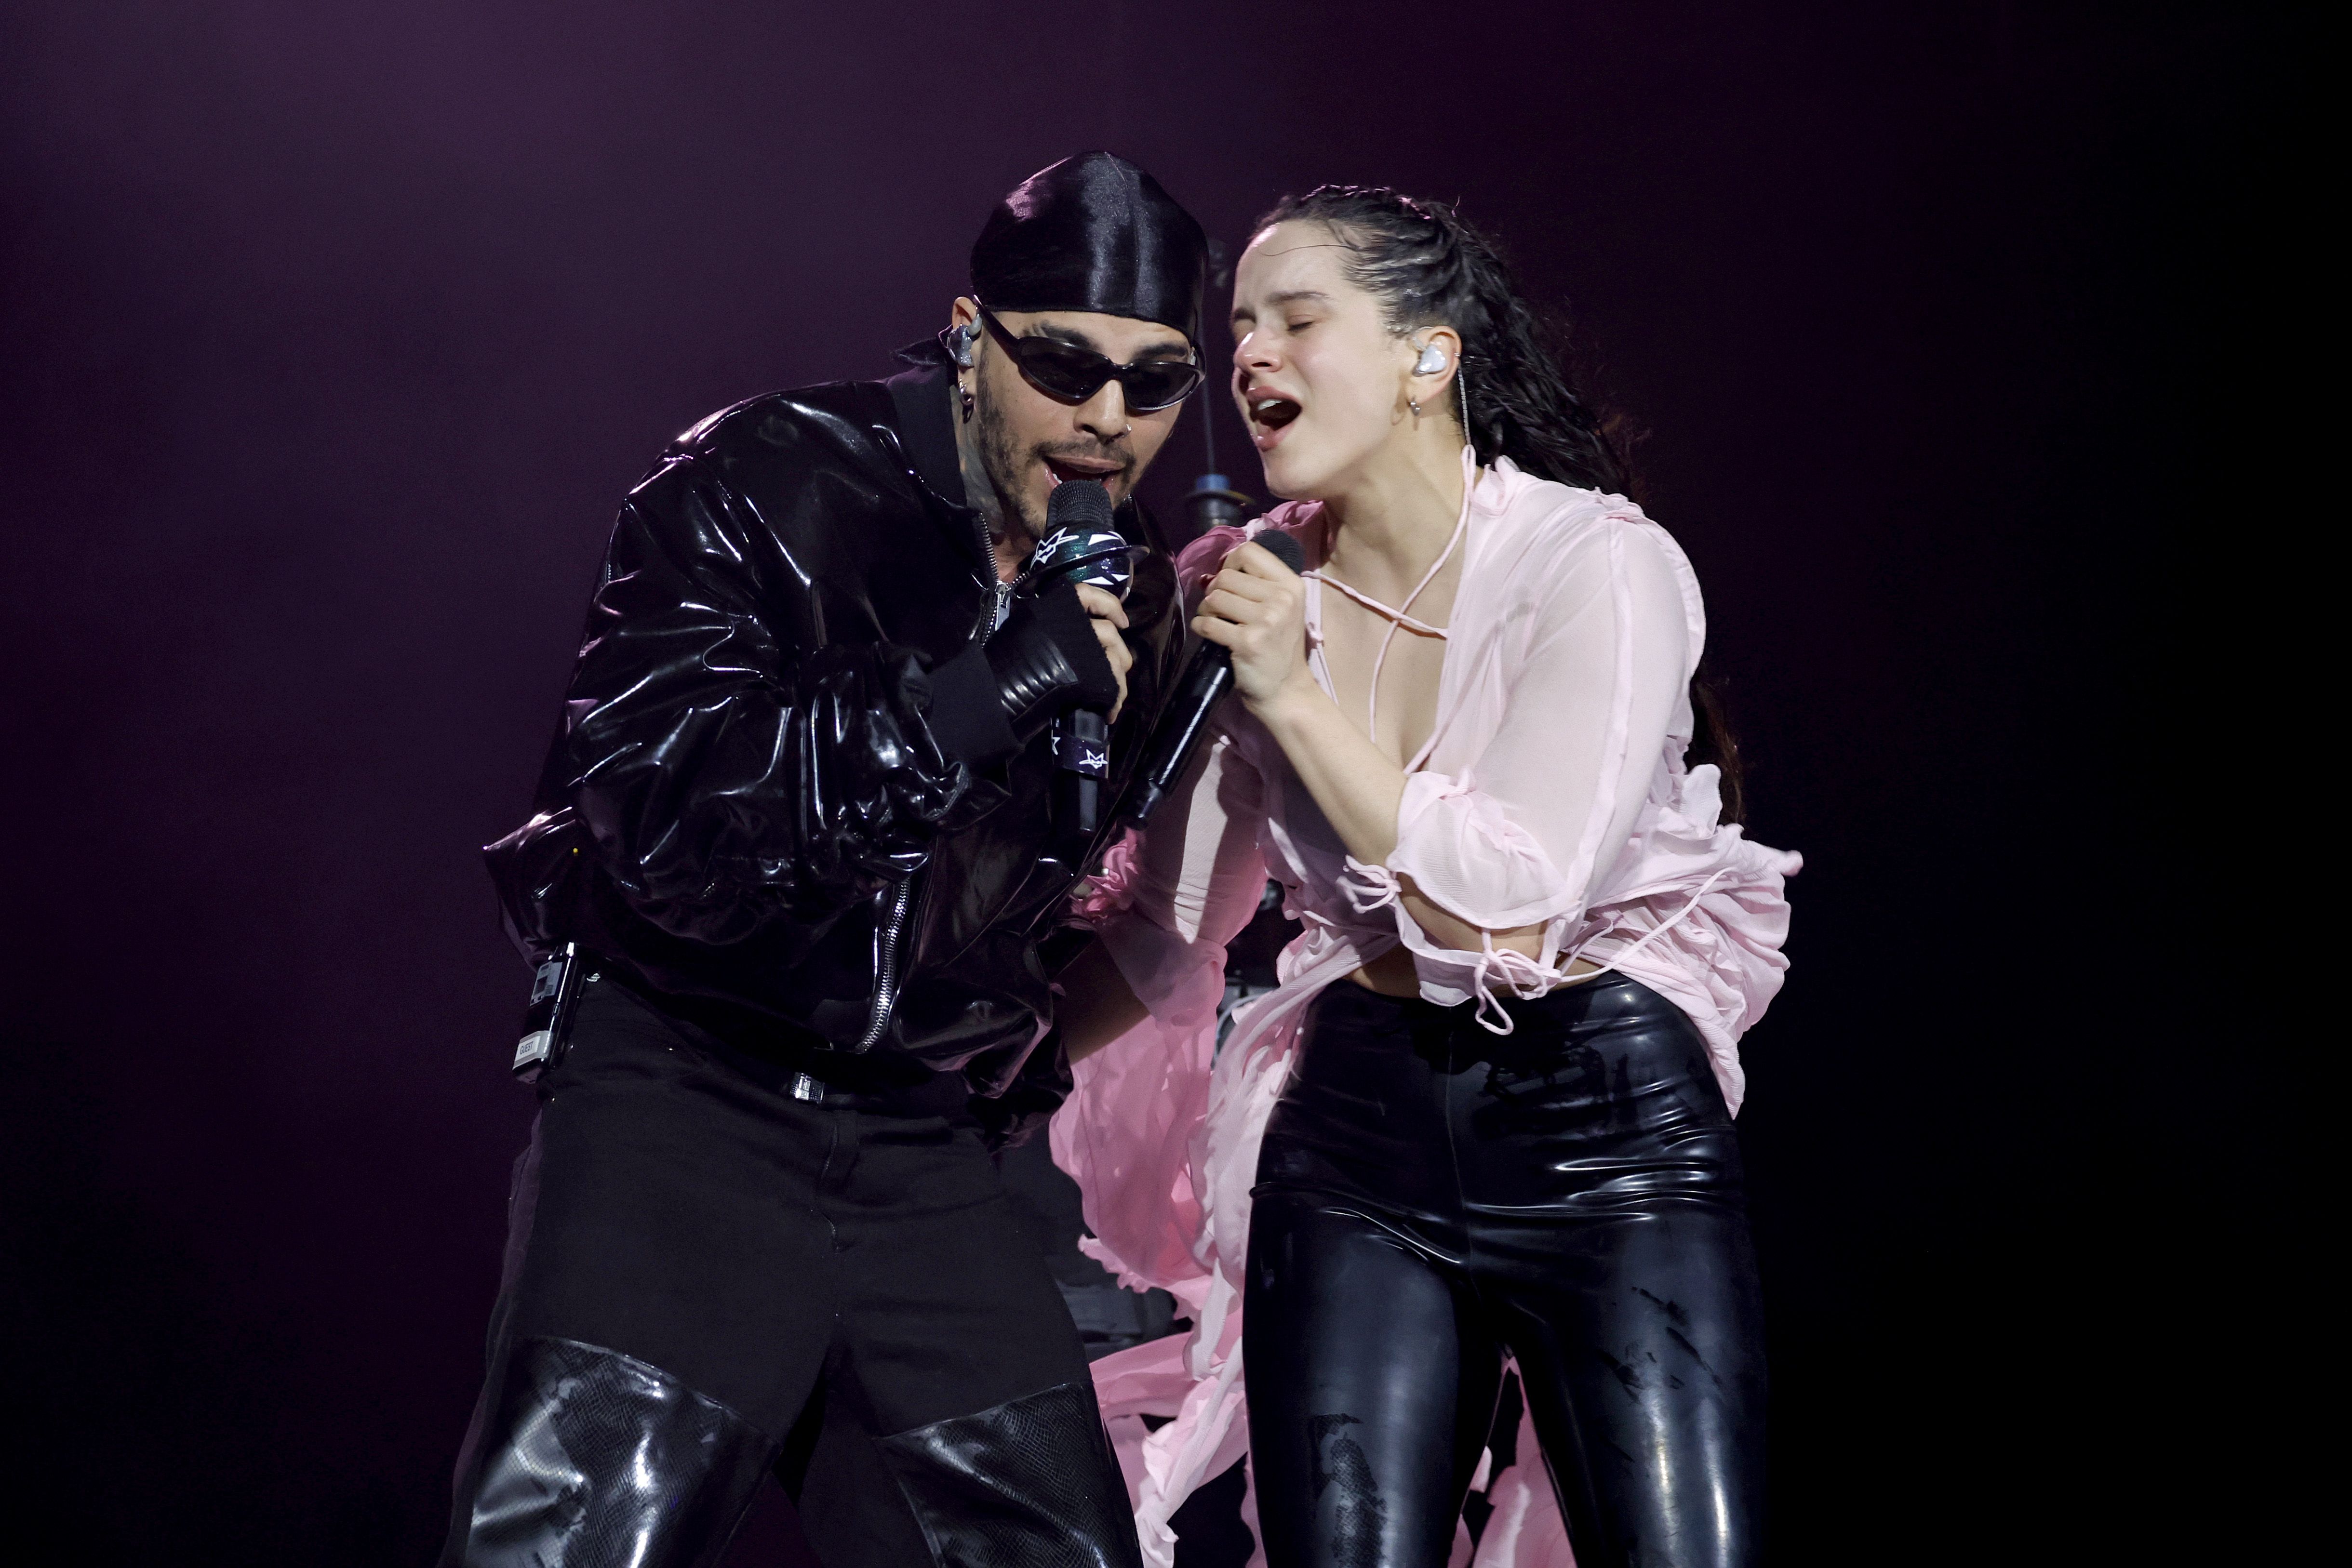 Rosalía and Rauw Alejandro Perform "Besos" and "Vampiros" at Coachella